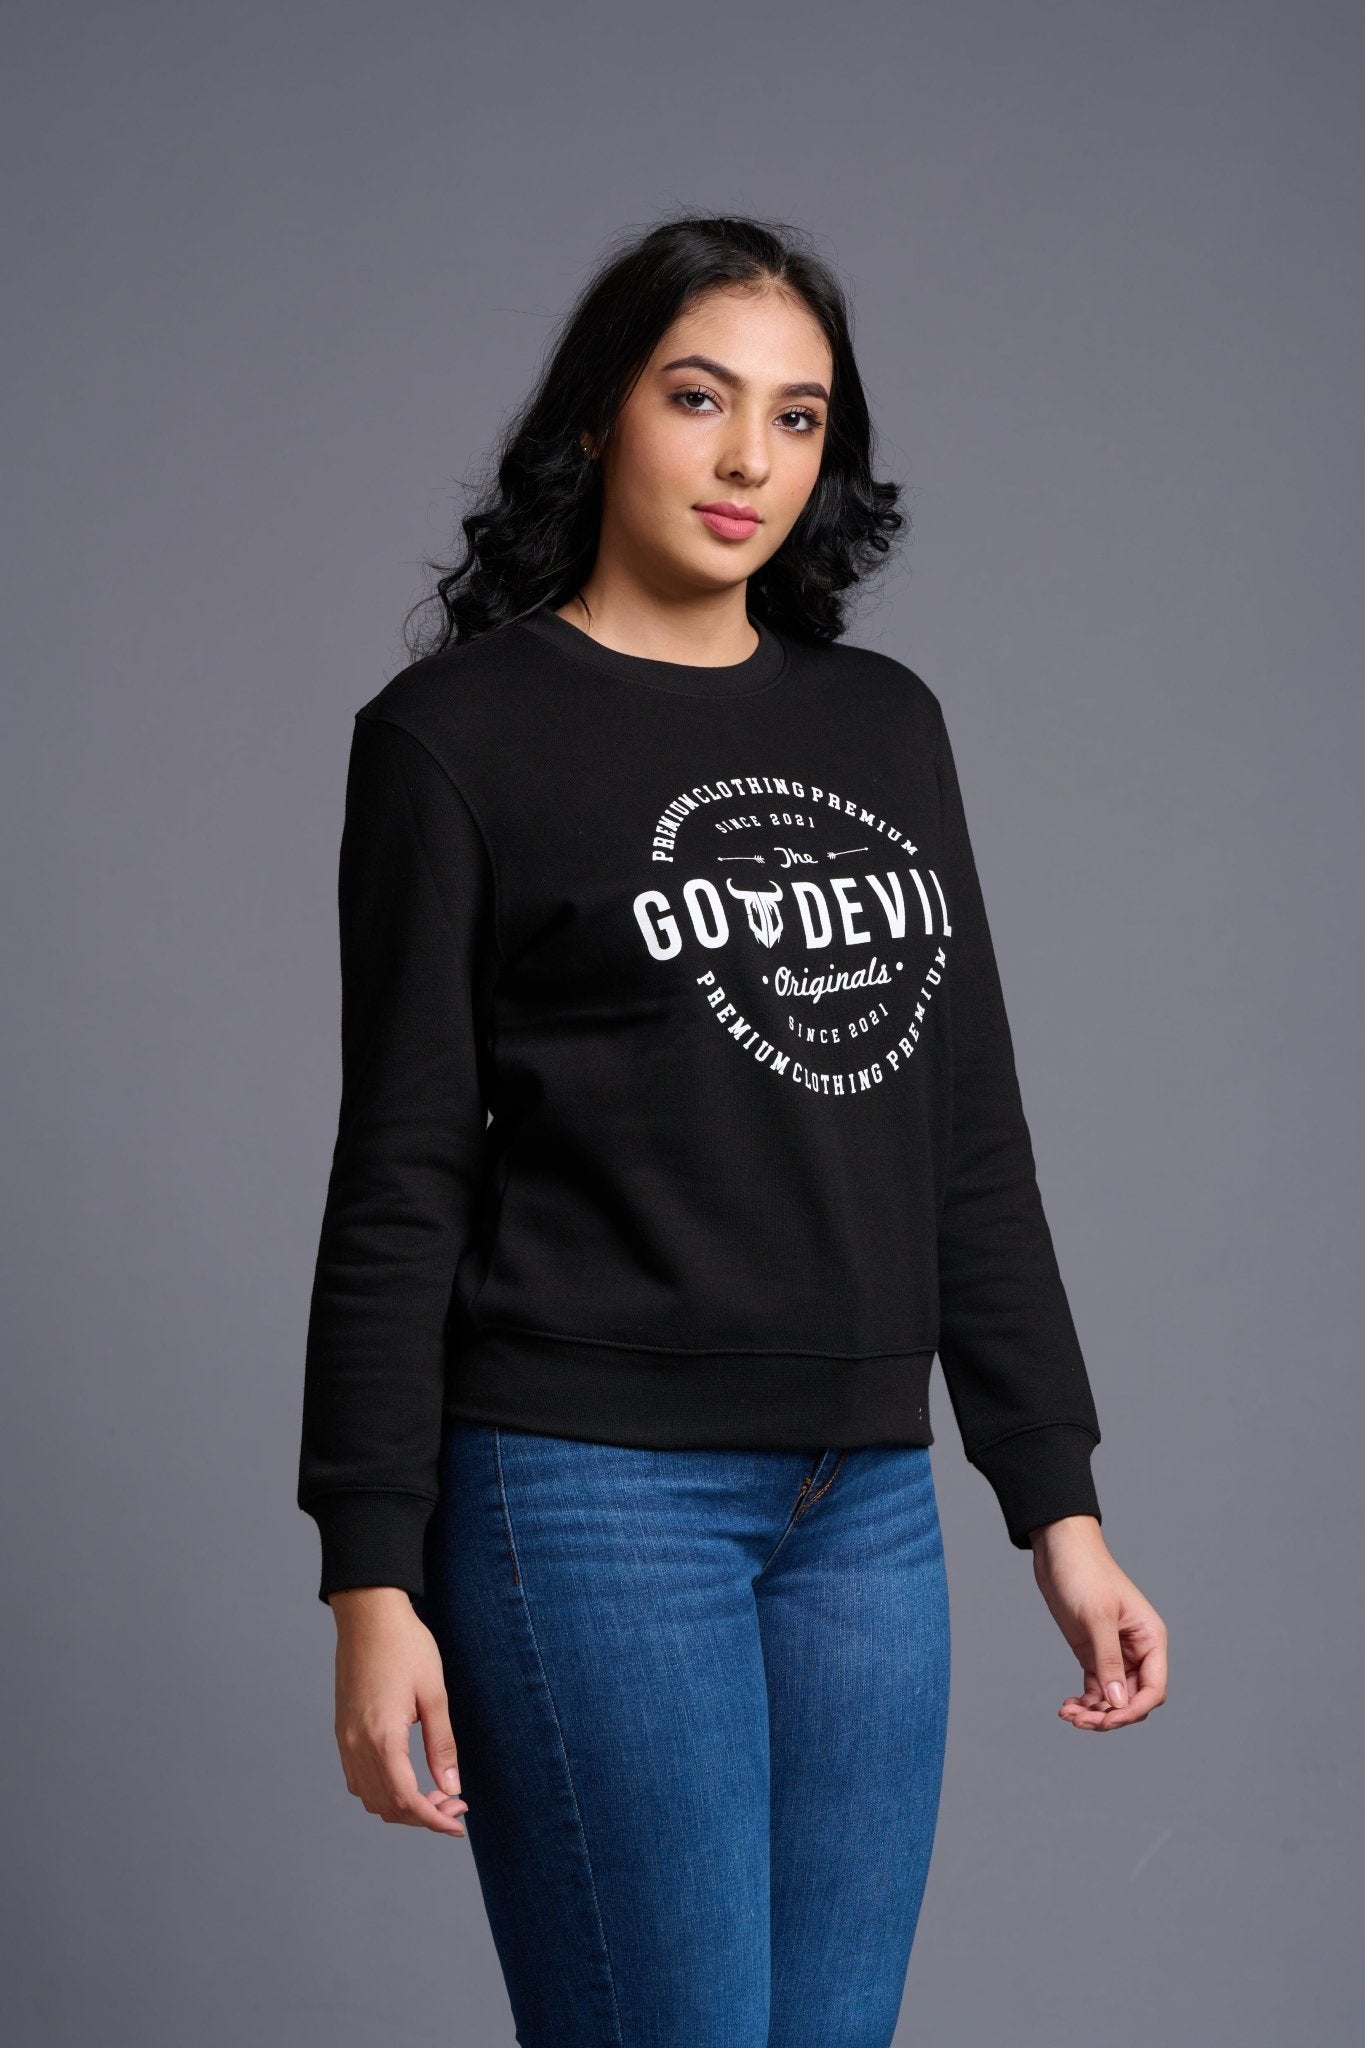 Go Devil Originals Printed Black Sweatshirt for Women - Go Devil